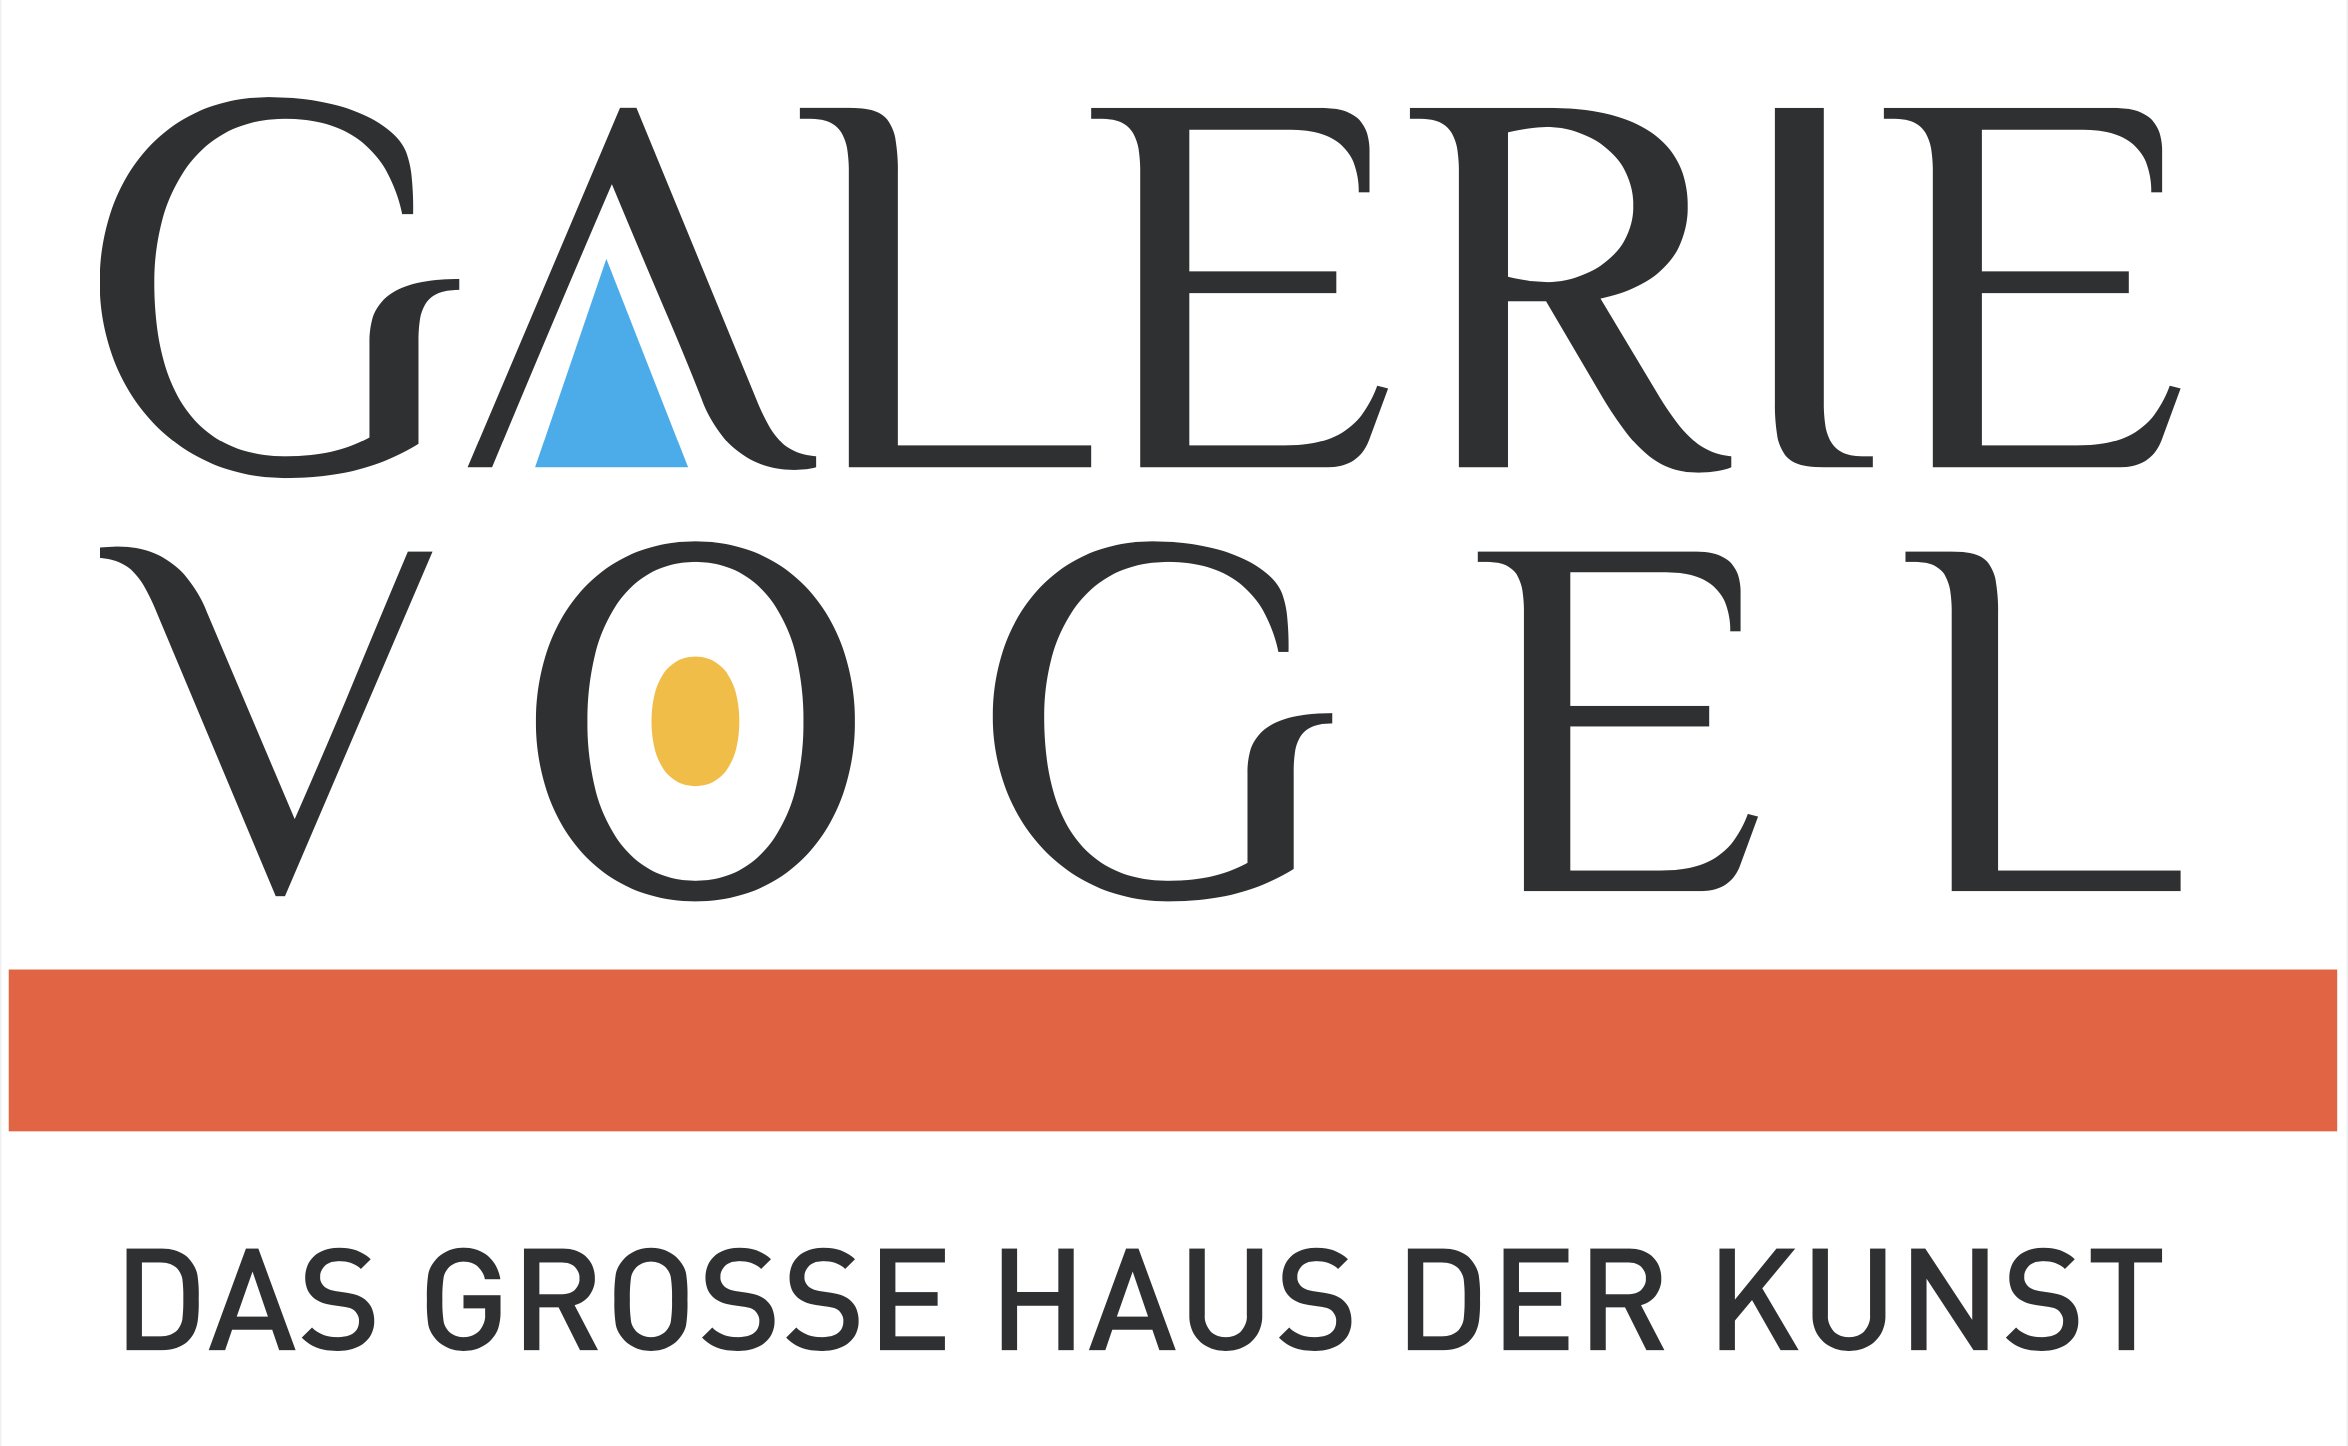 Bild 11 Galerie Vogel in Heidelberg